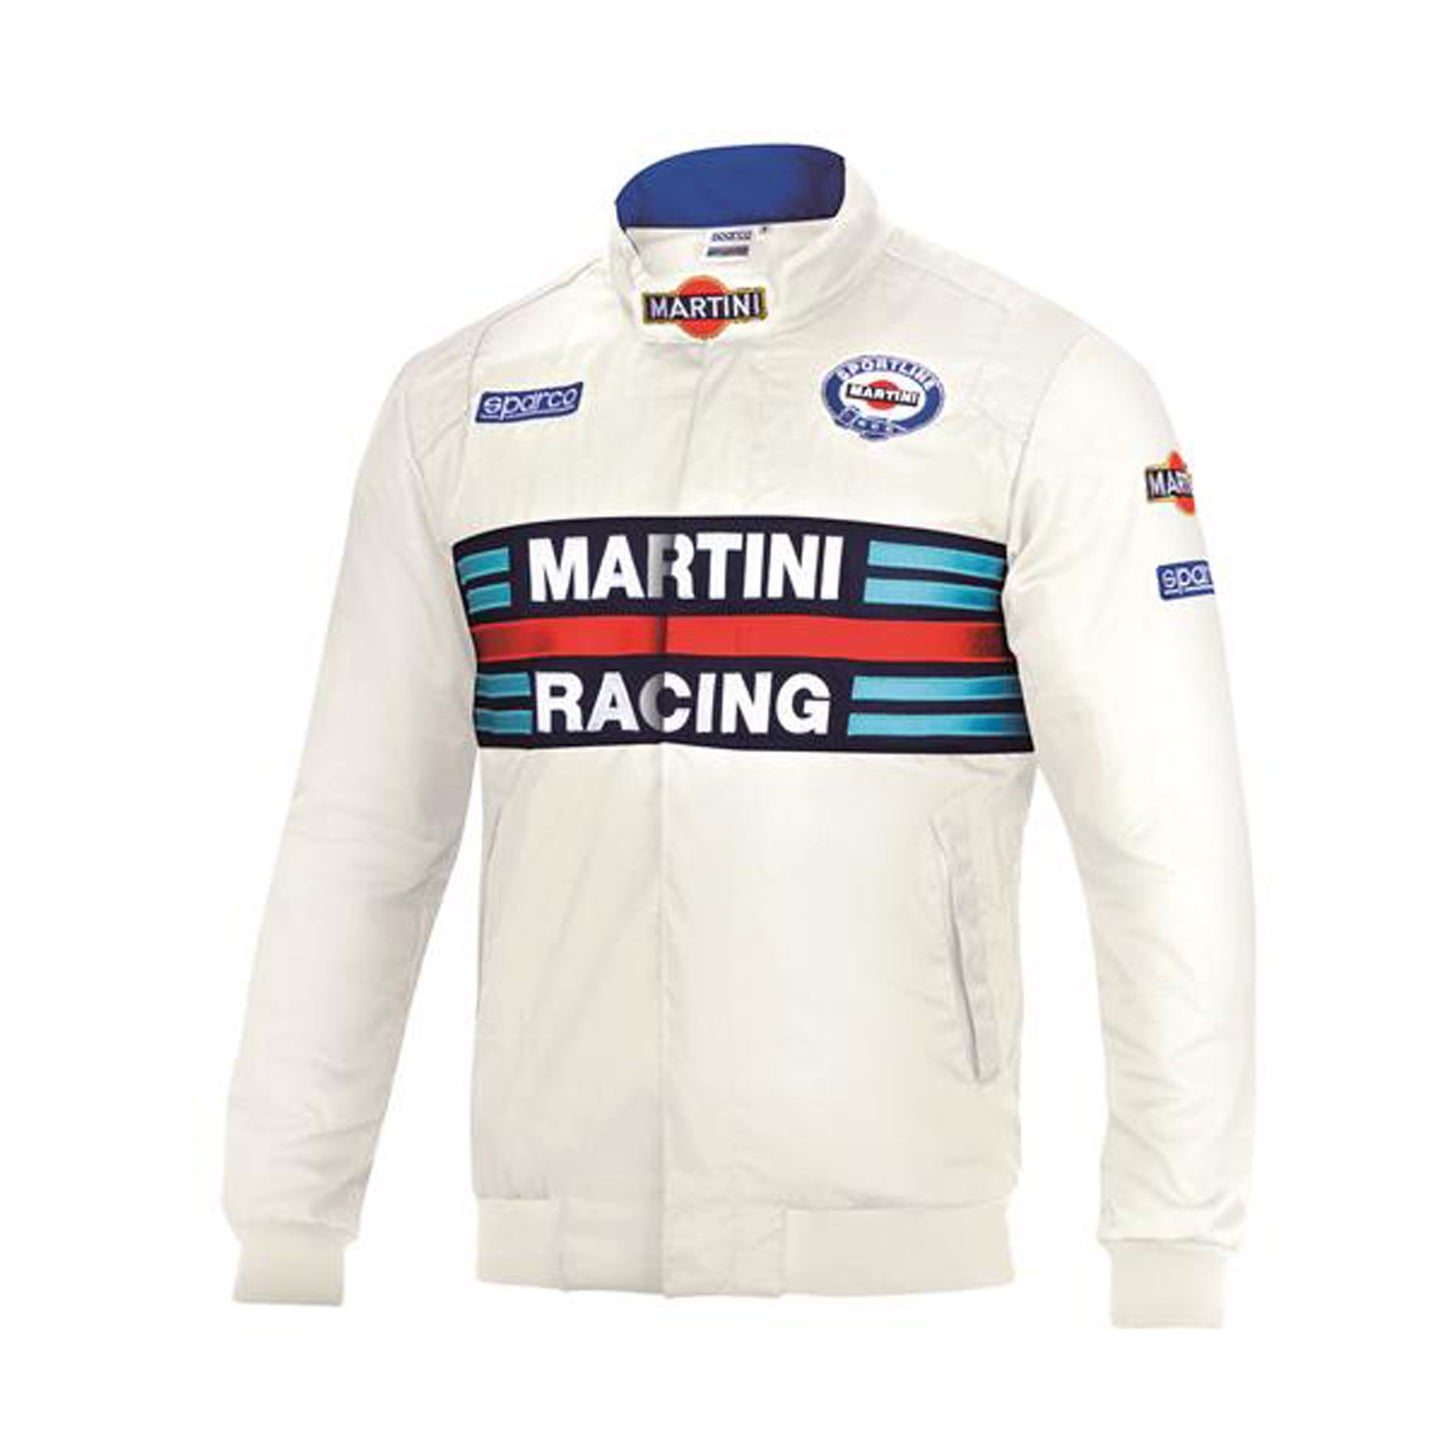 Men's Sparco Martini  jacket